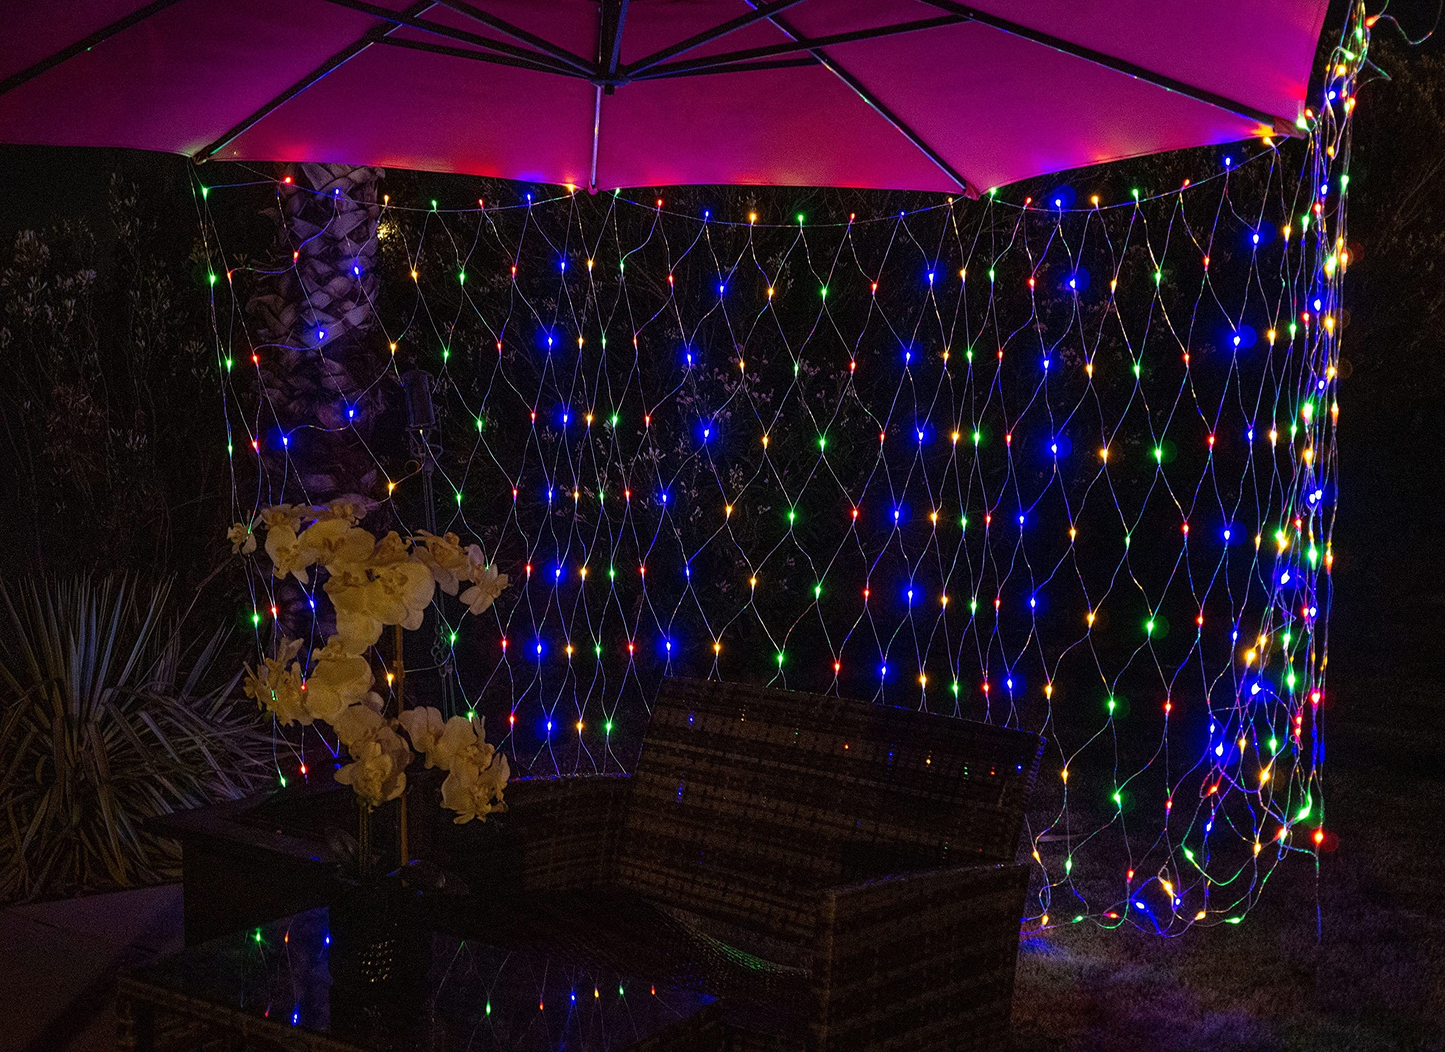 4 Pack 100 LED Christmas Net Lights Multicolor